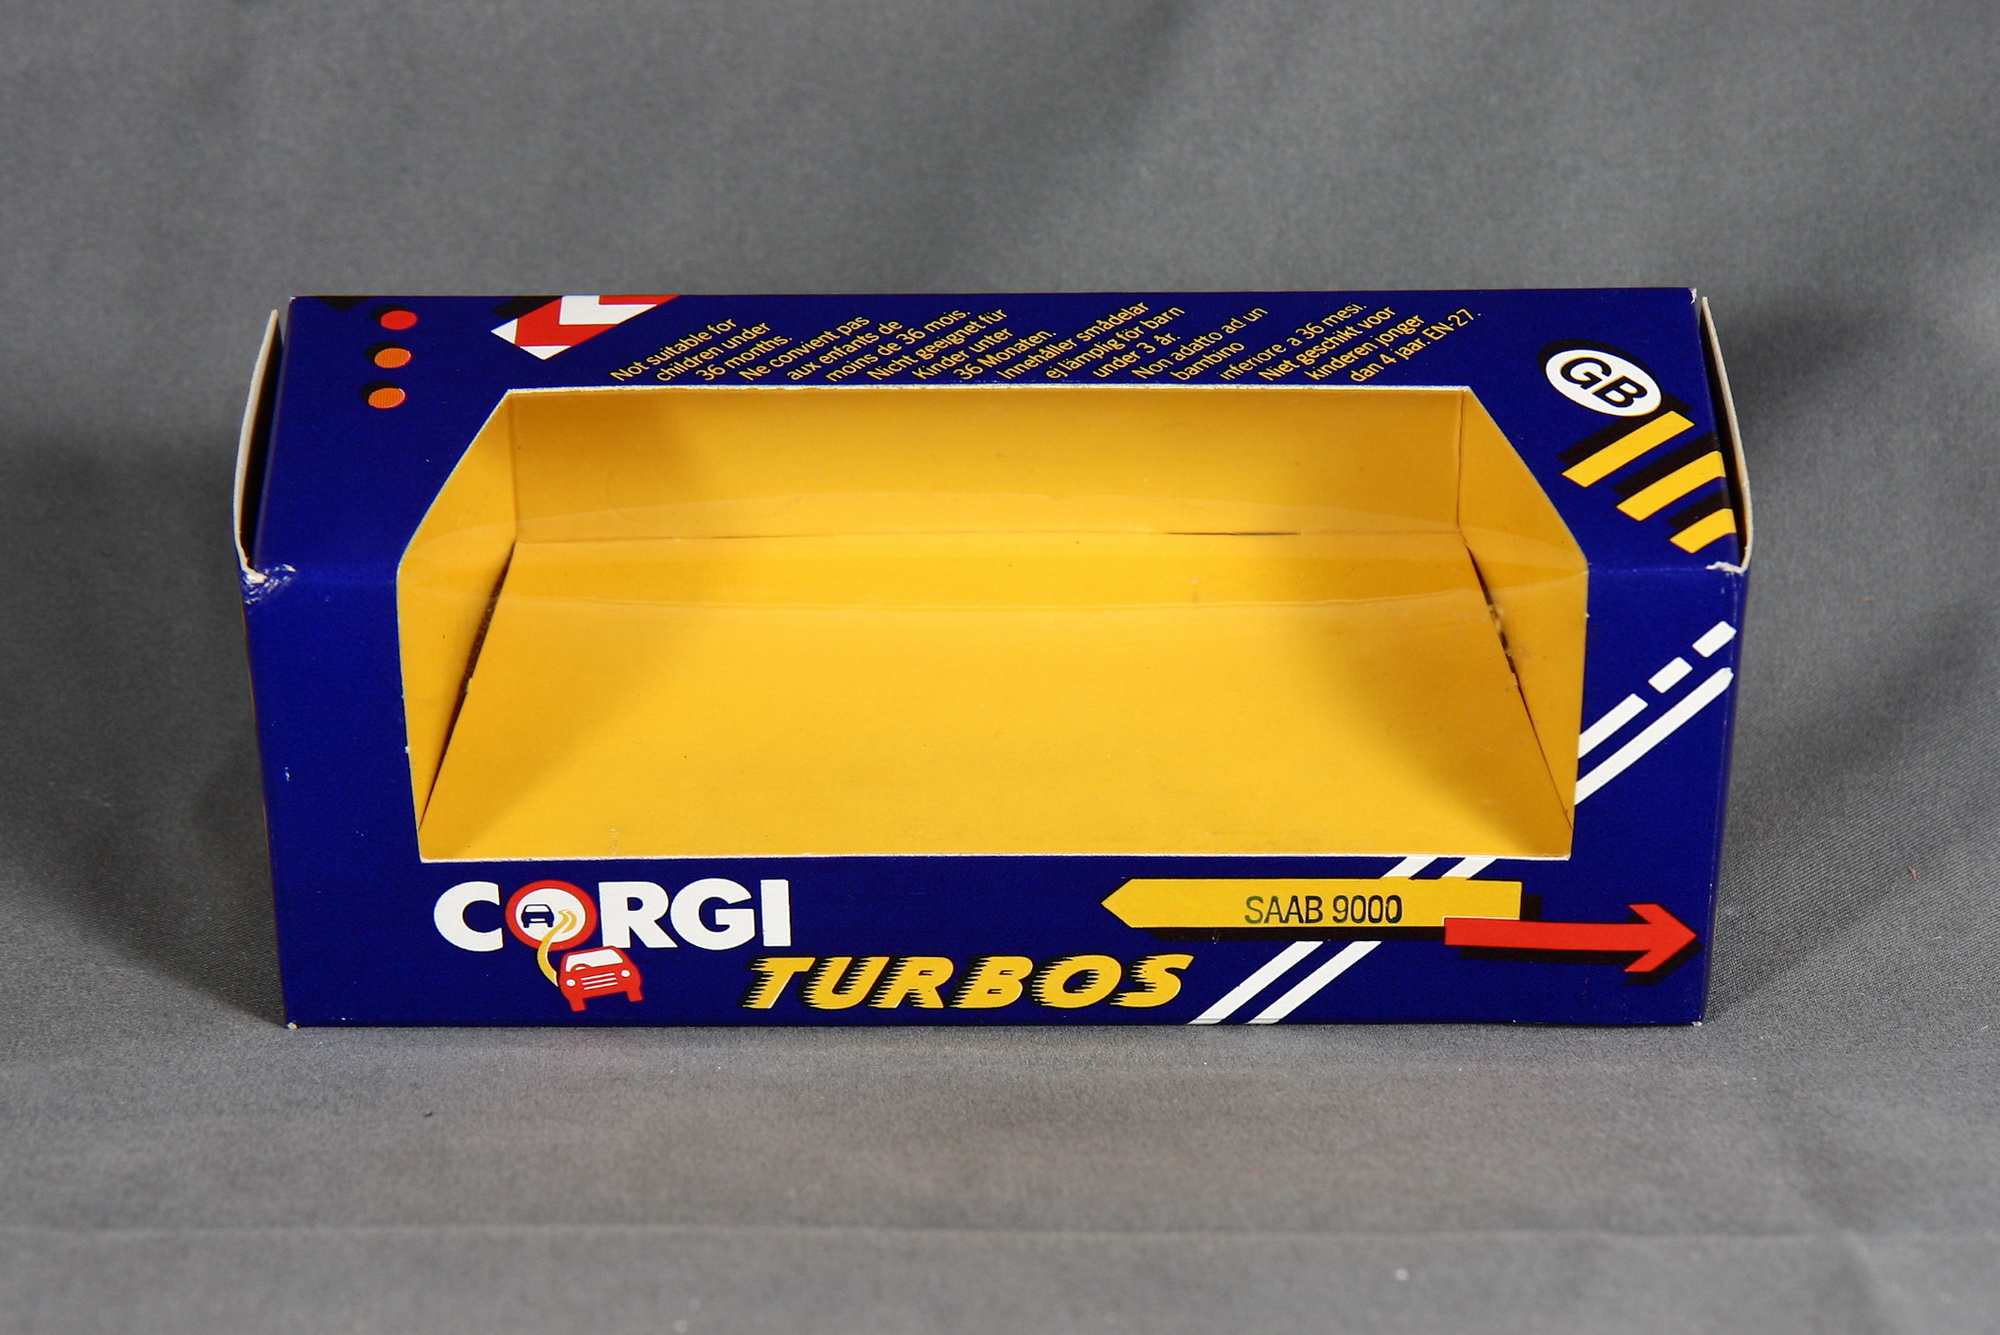 9000 - 1985 CC Turbo 16 - Promotion Bild 50